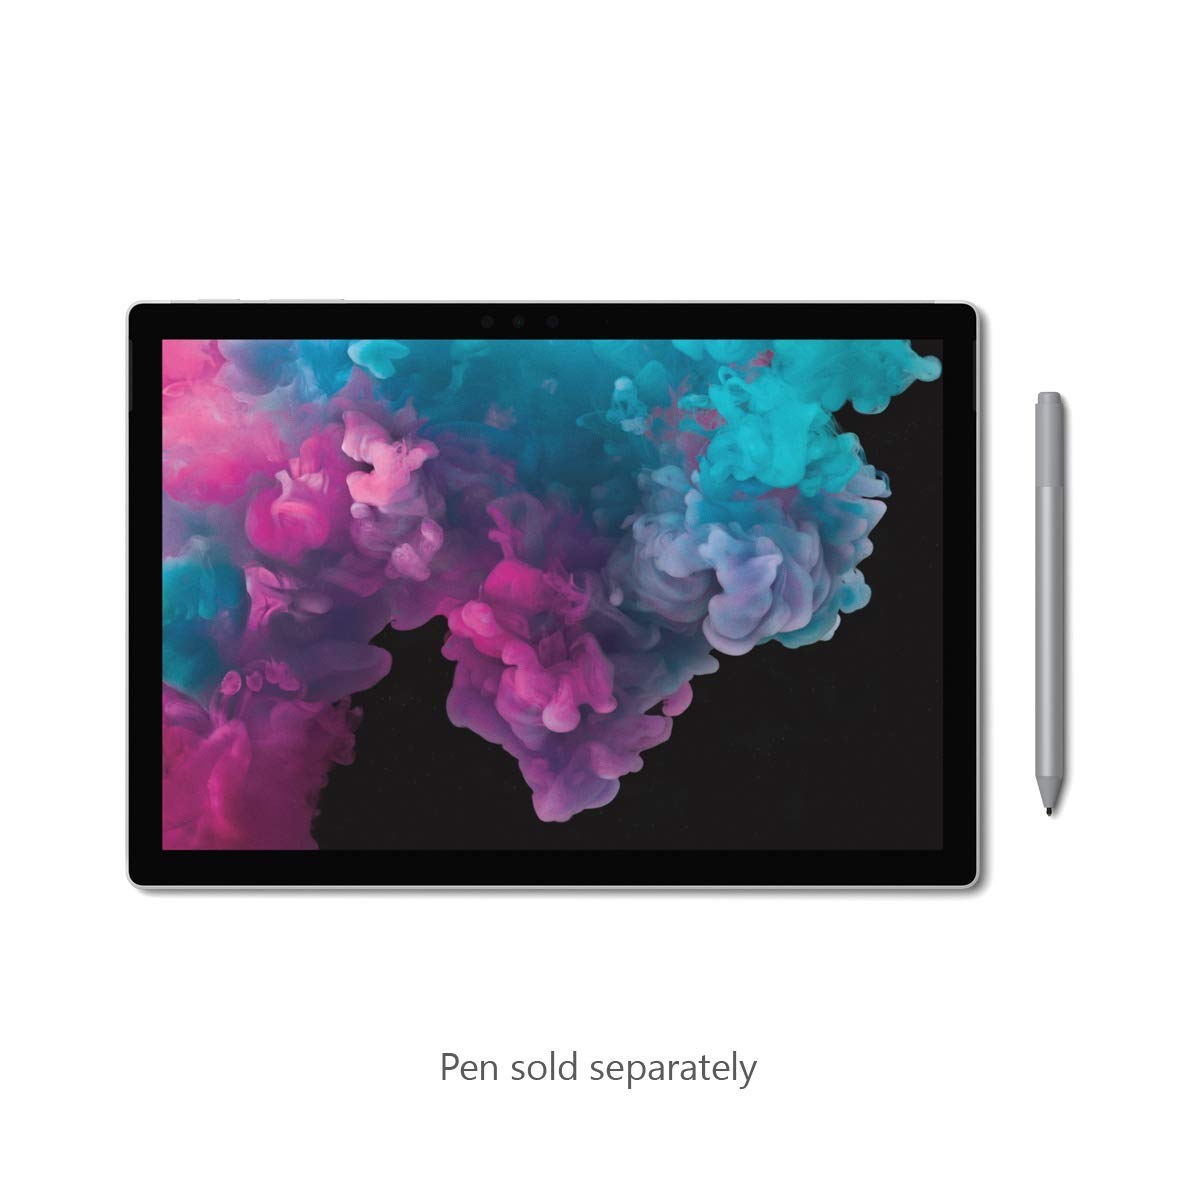 2019 Surface Pro 6 Business 12.3 Touchscreen (2736 x 1824) Latest Model Tablet PC | Intel Quad-Core i5-8350U | 8GB RAM | 256GB SSD | Windows 10 Pro | Platinum (Renewed)